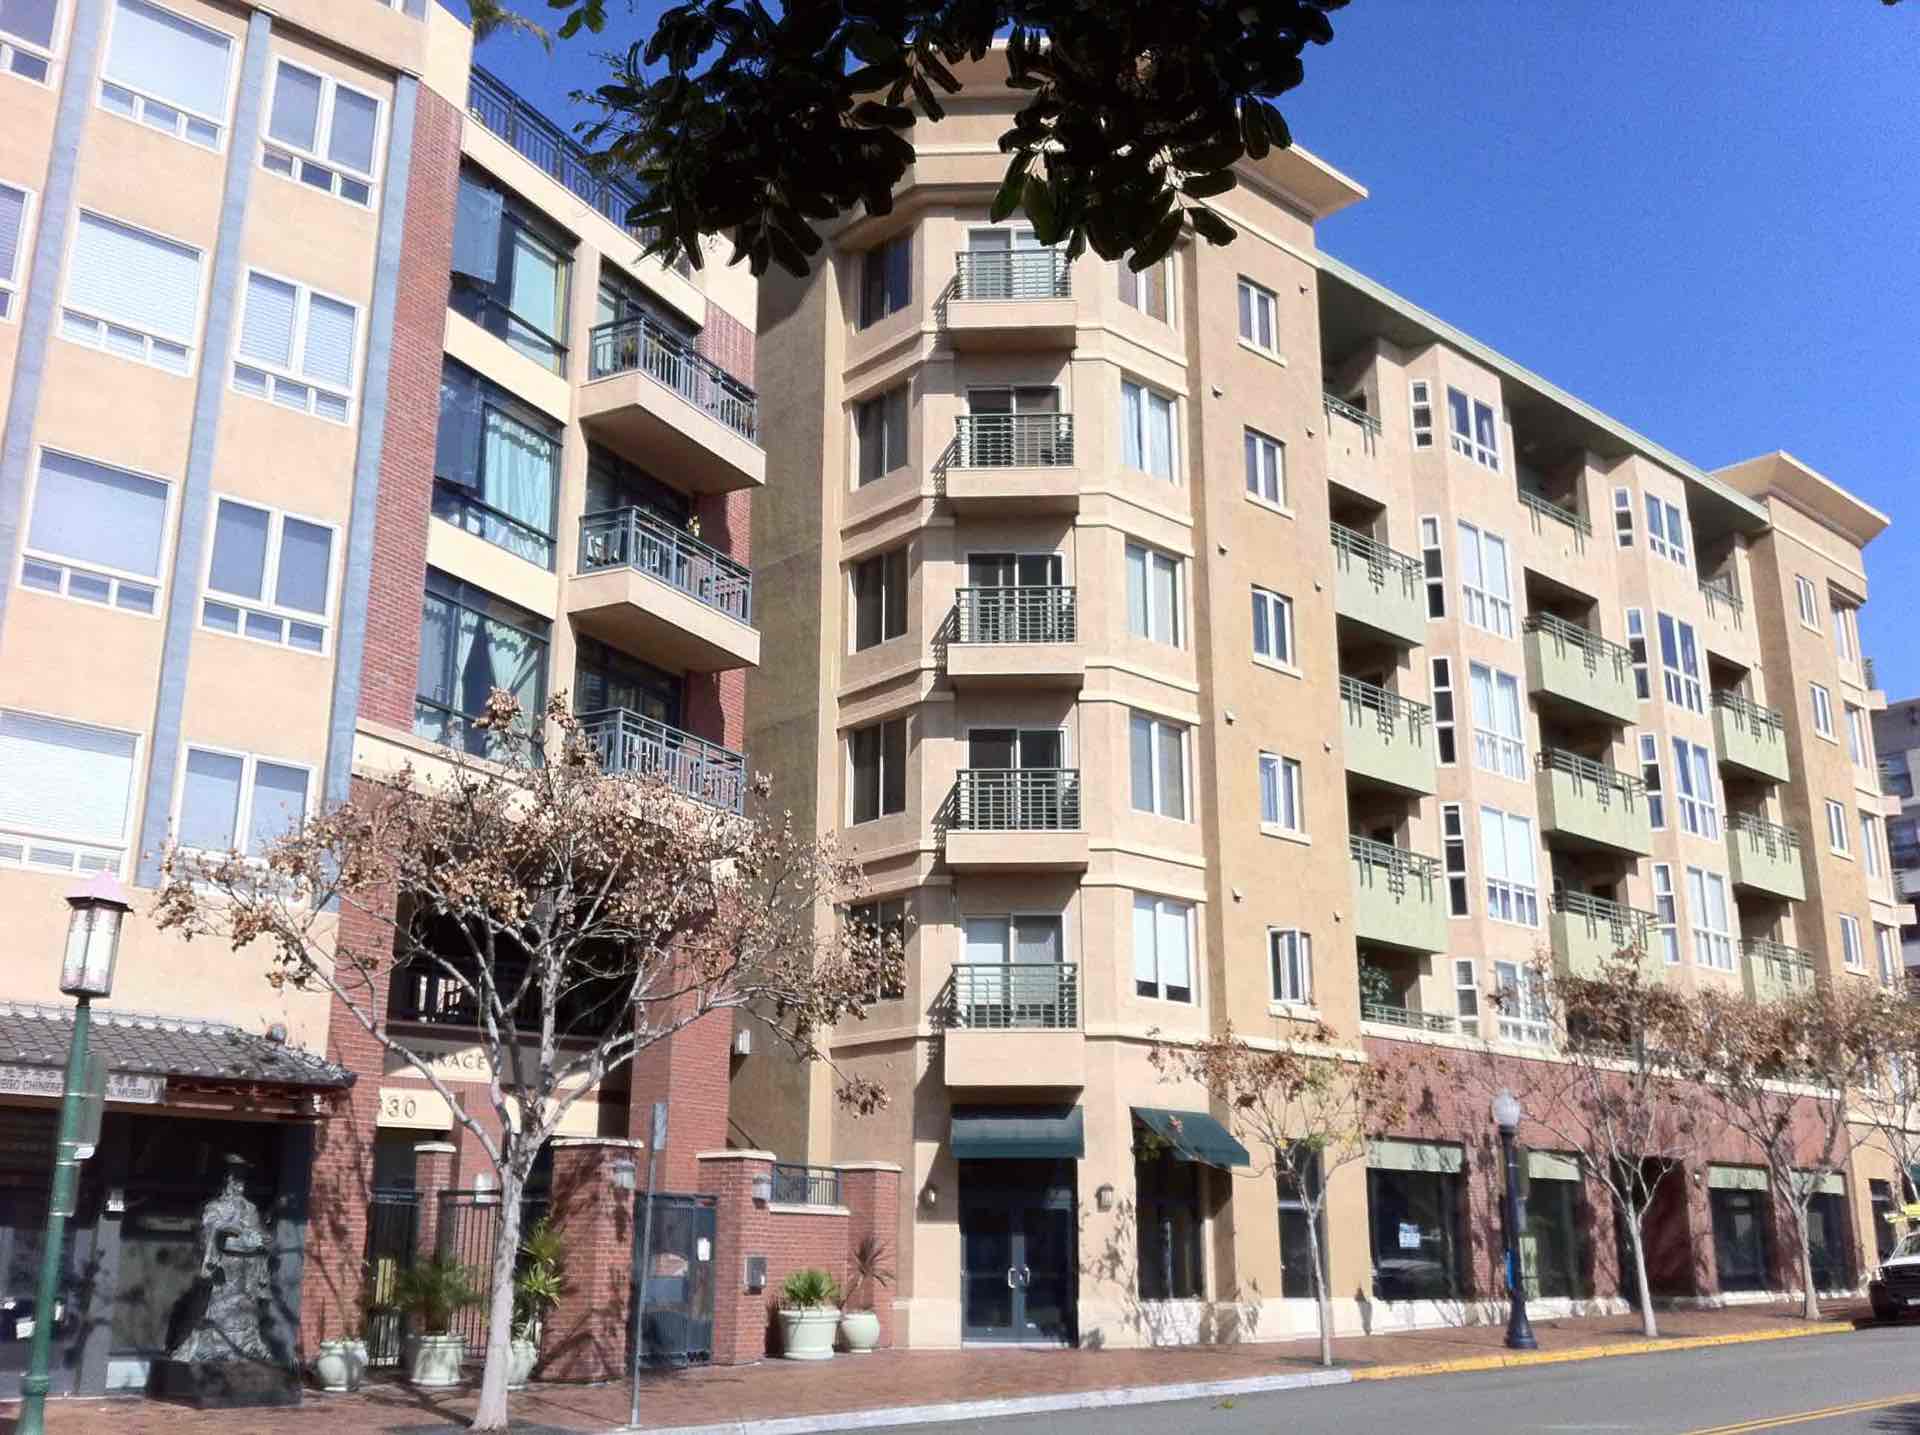 Pacific Terrace condos in San Diego Marina District